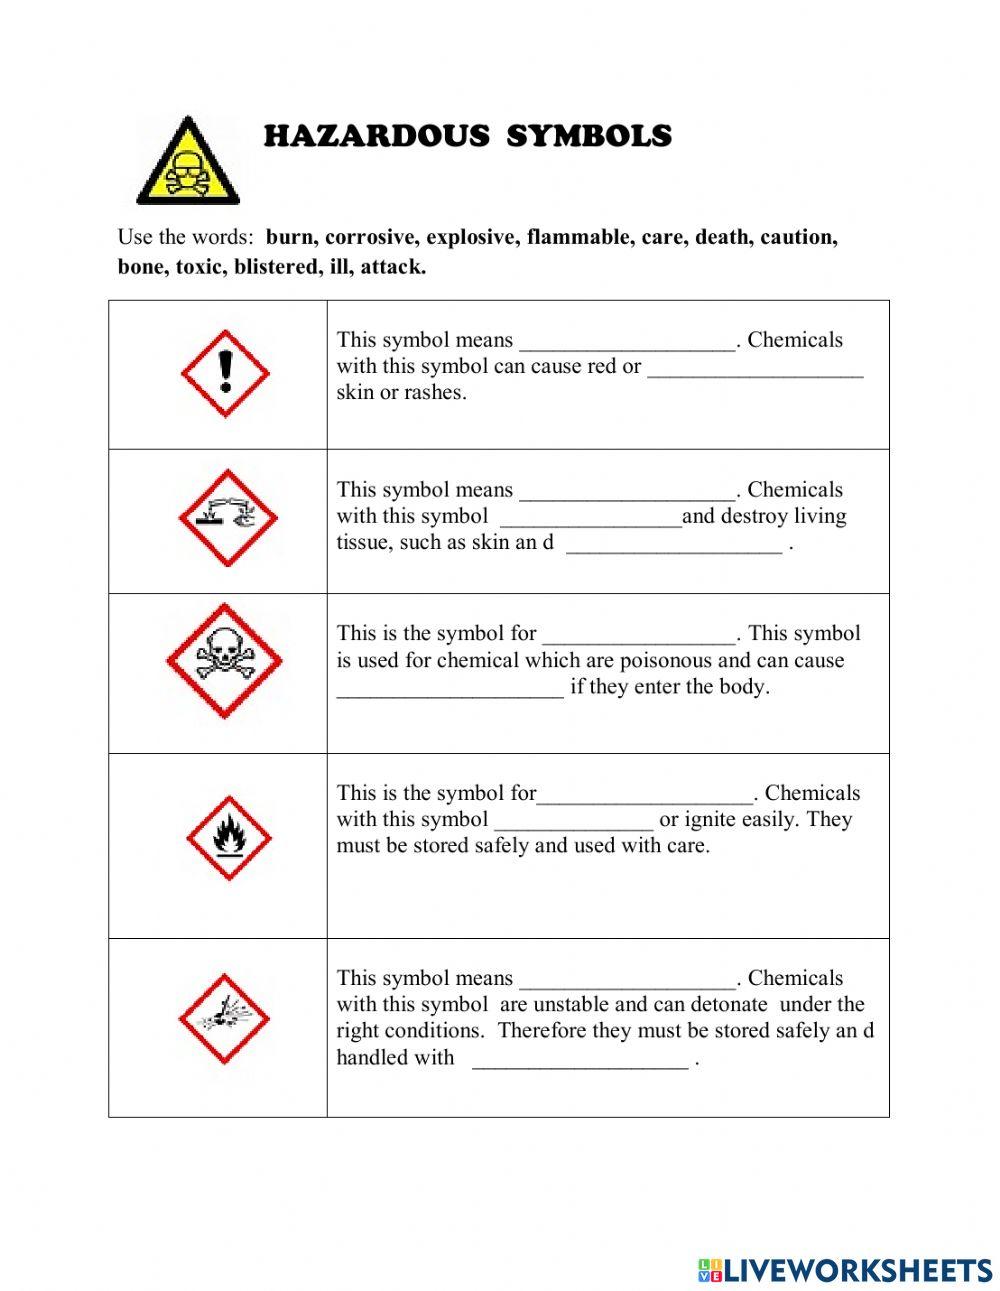 Hazardous Symbols worksheet | Live Worksheets